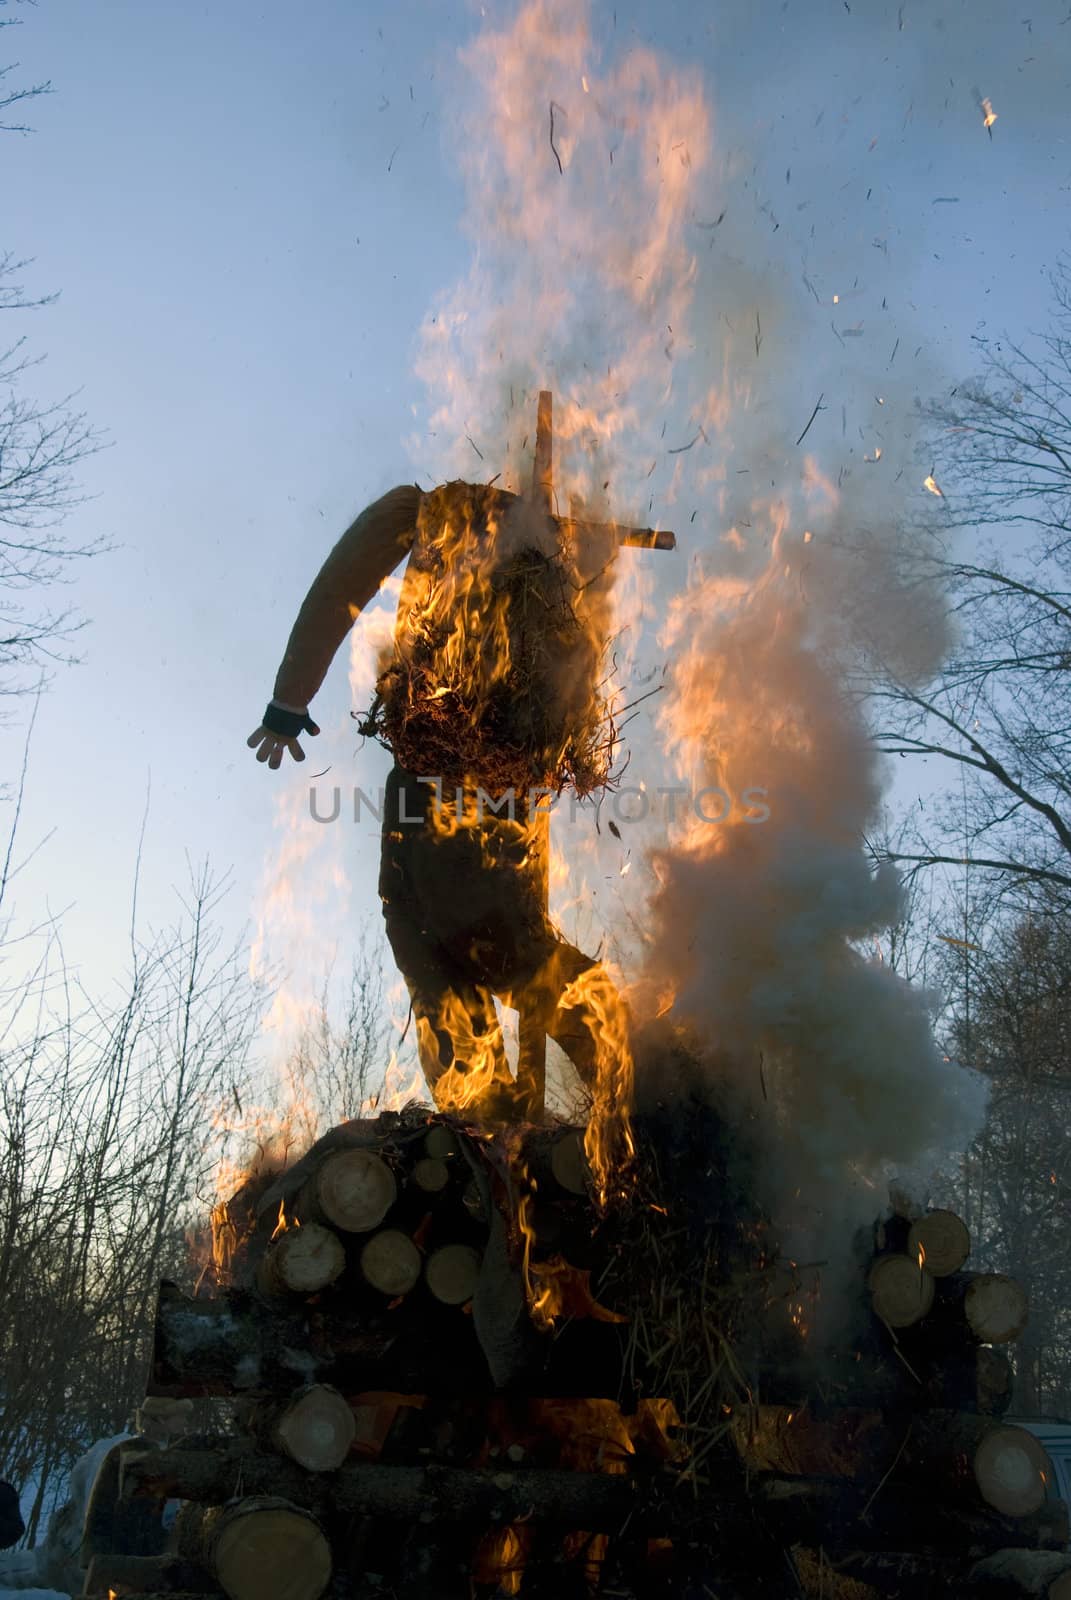 Mardi gras winter jackstraw effigy in spring fire